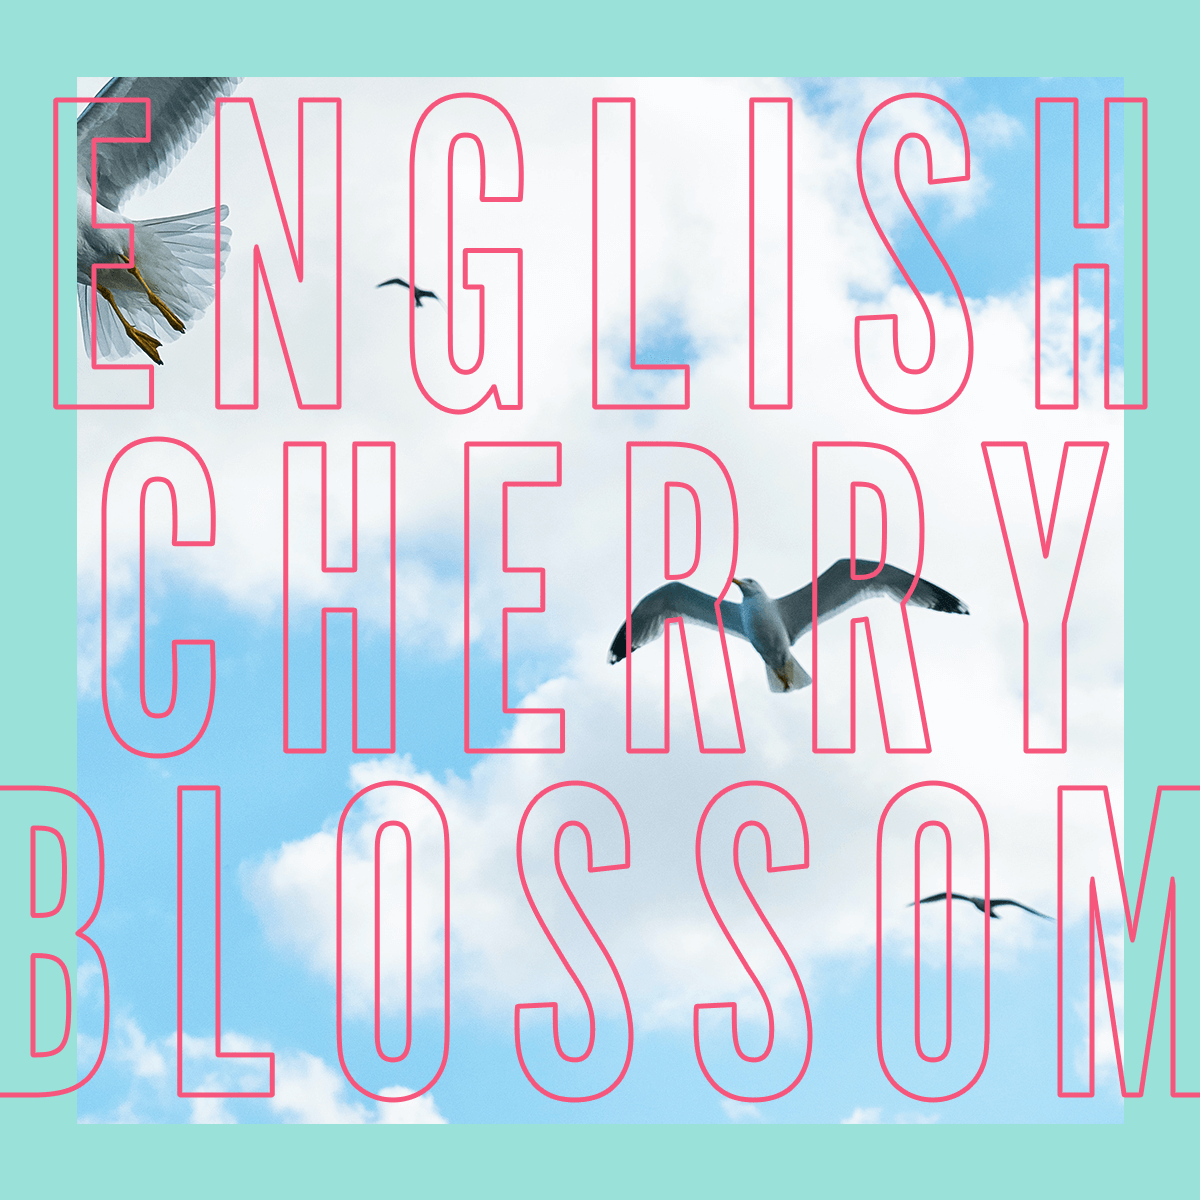 English Cherry Blossom Fragrance 1.0oz